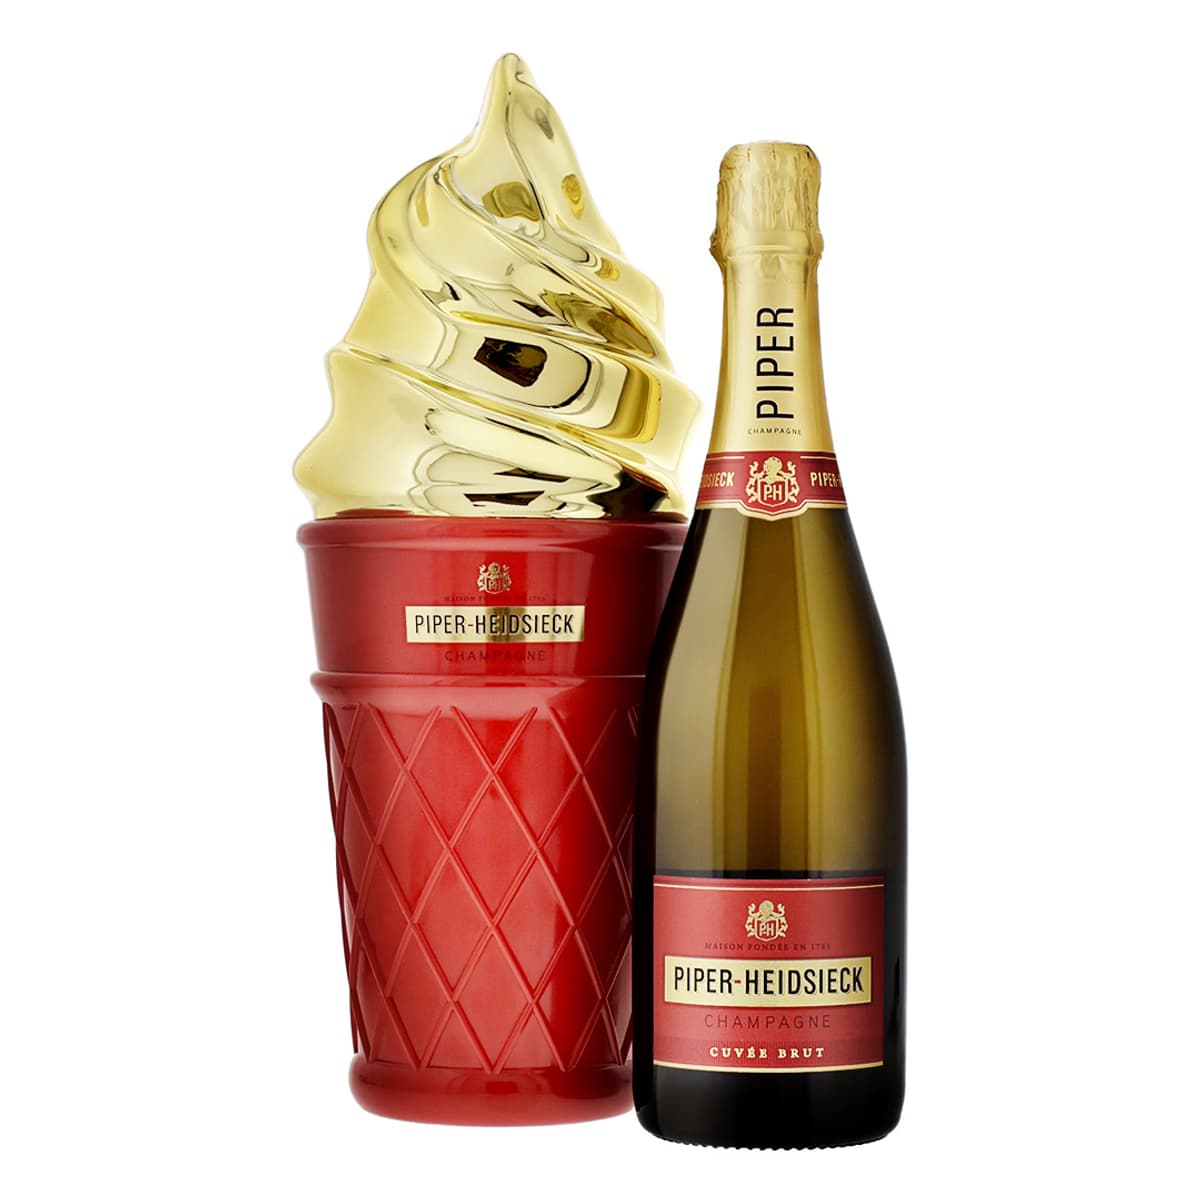 75cl Champagner mit Cooler Ice Cuvée Cream Brut Piper-Heidsieck